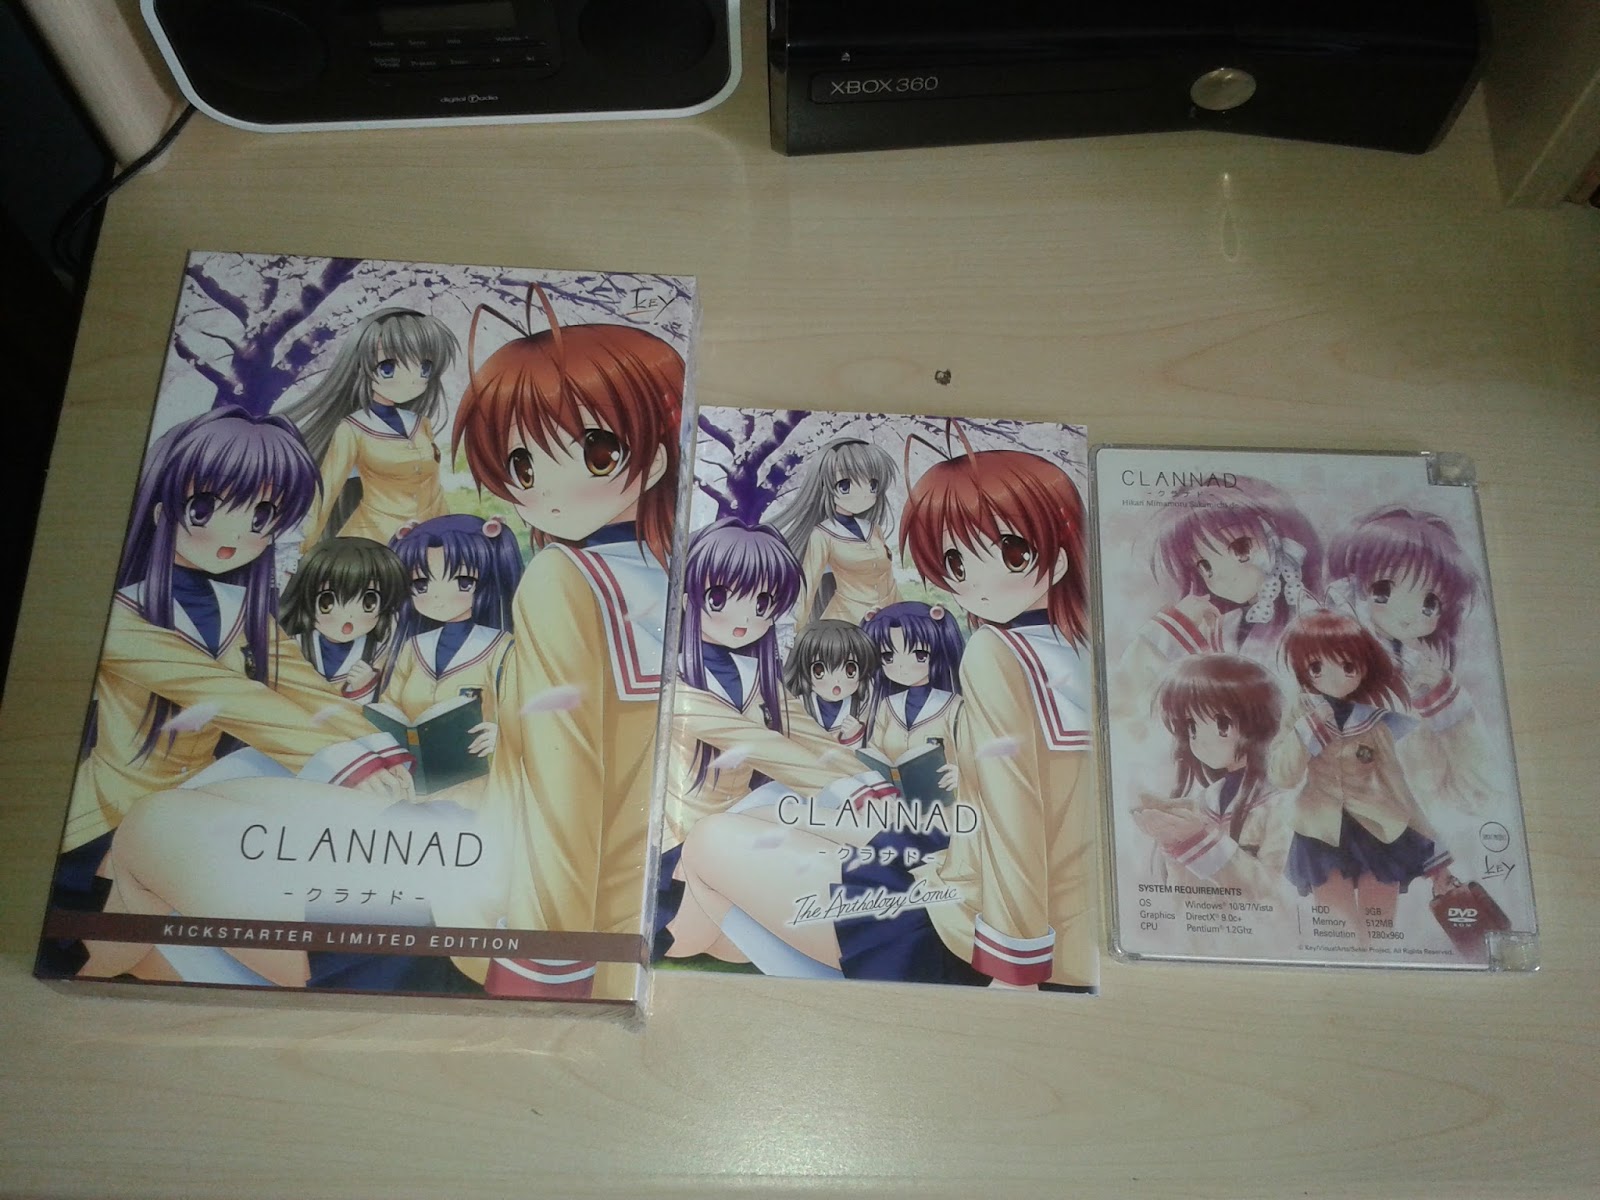 CLANNAD - Anthology Manga on Steam